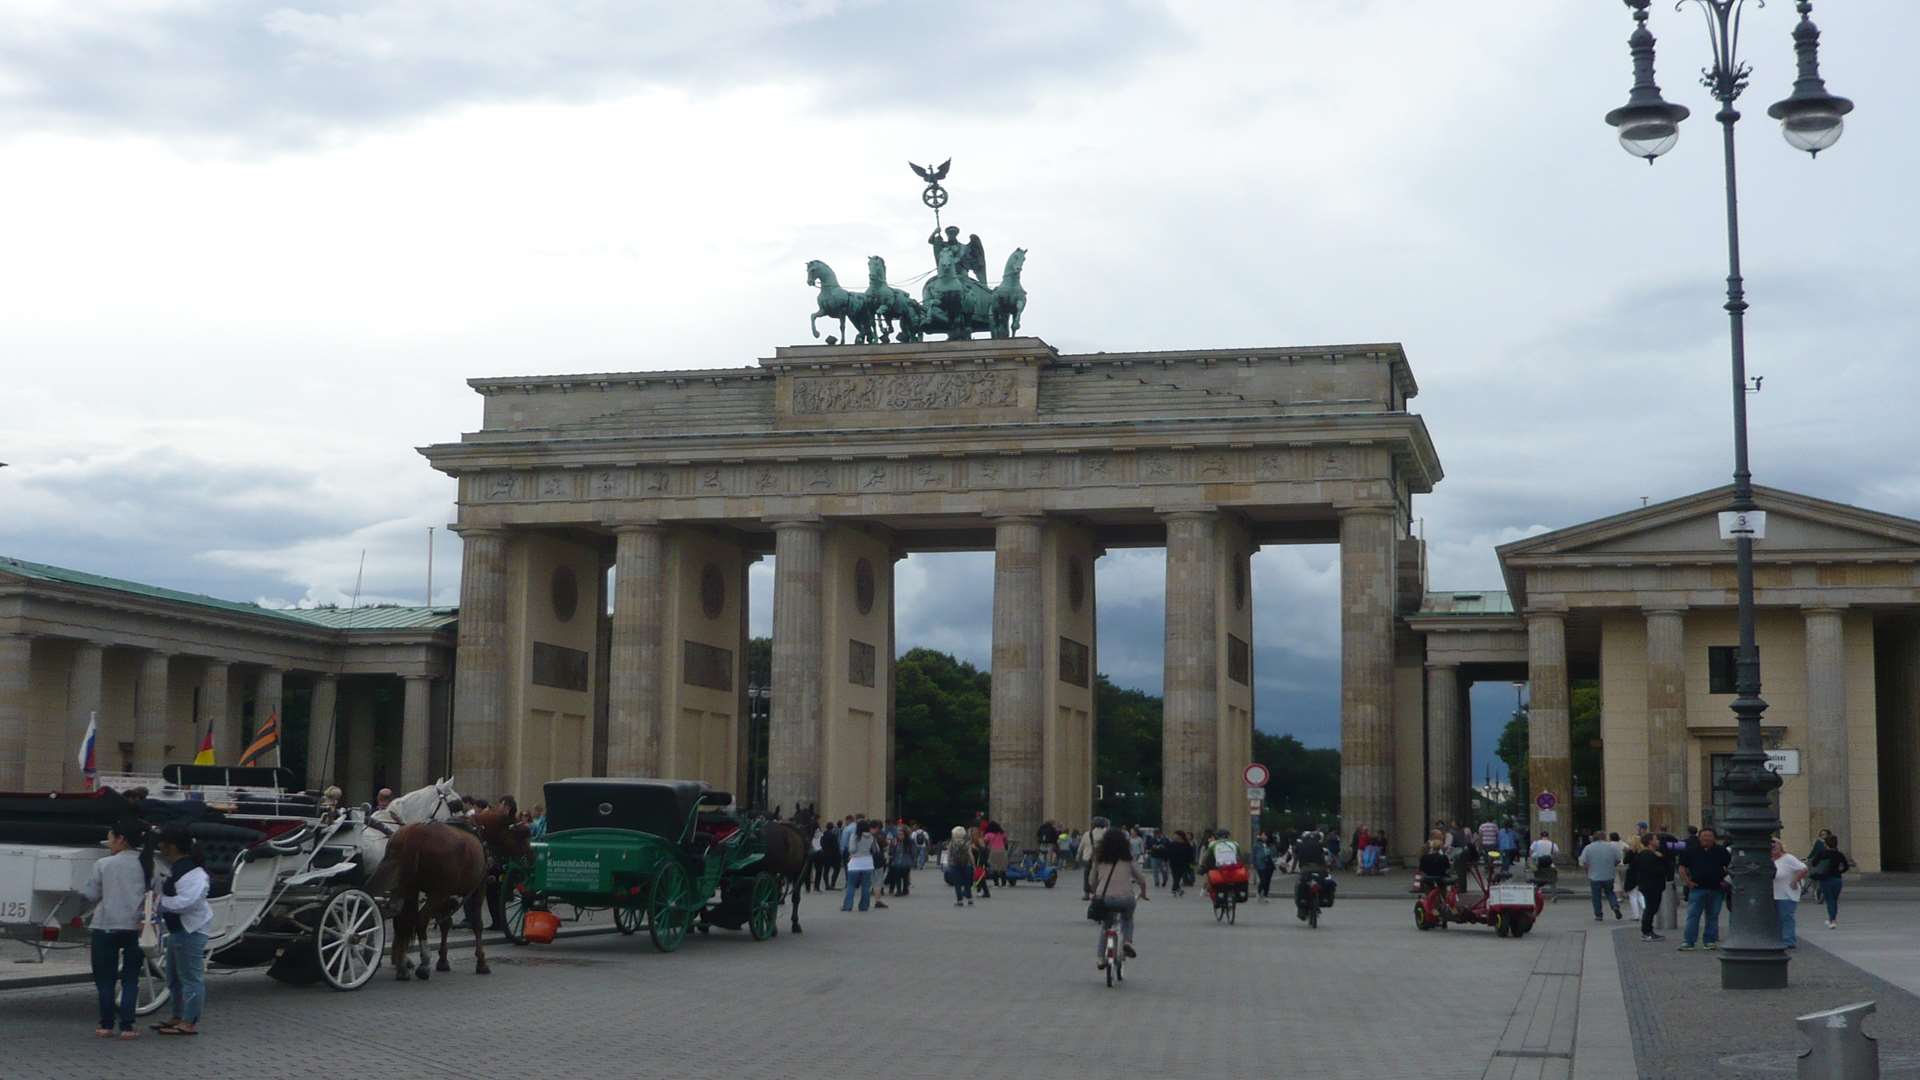 The symbol of Berlin - the Brandenburg Gate